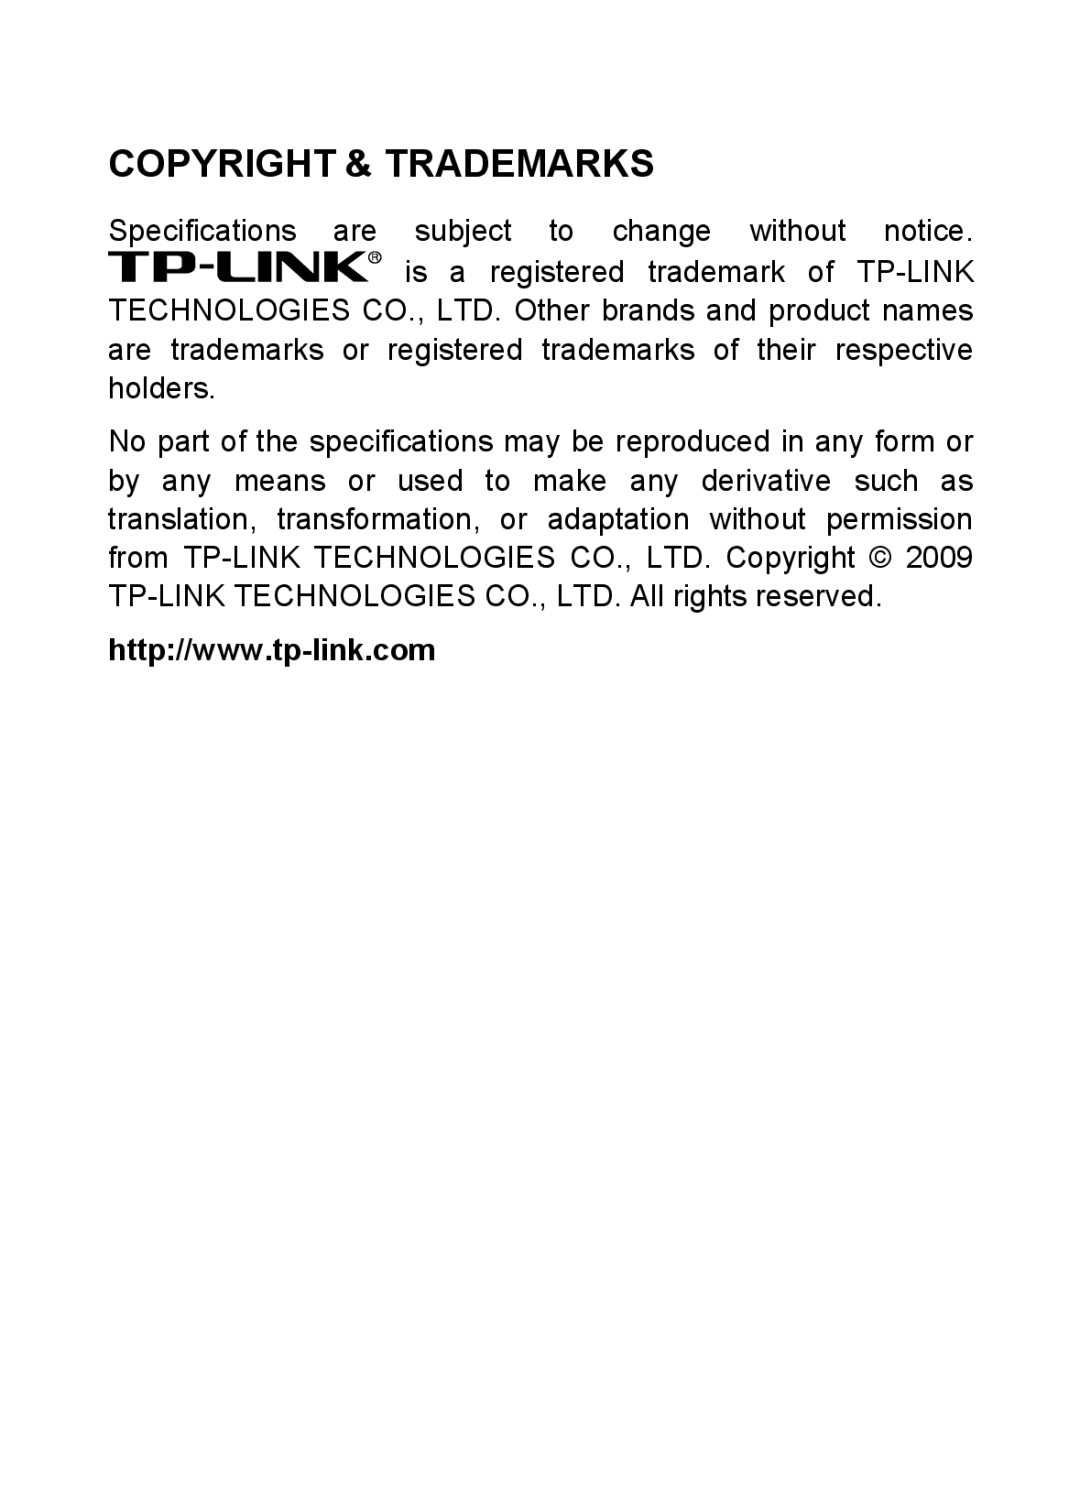 TP-Link TL-POE200 manual Copyright & Trademarks 